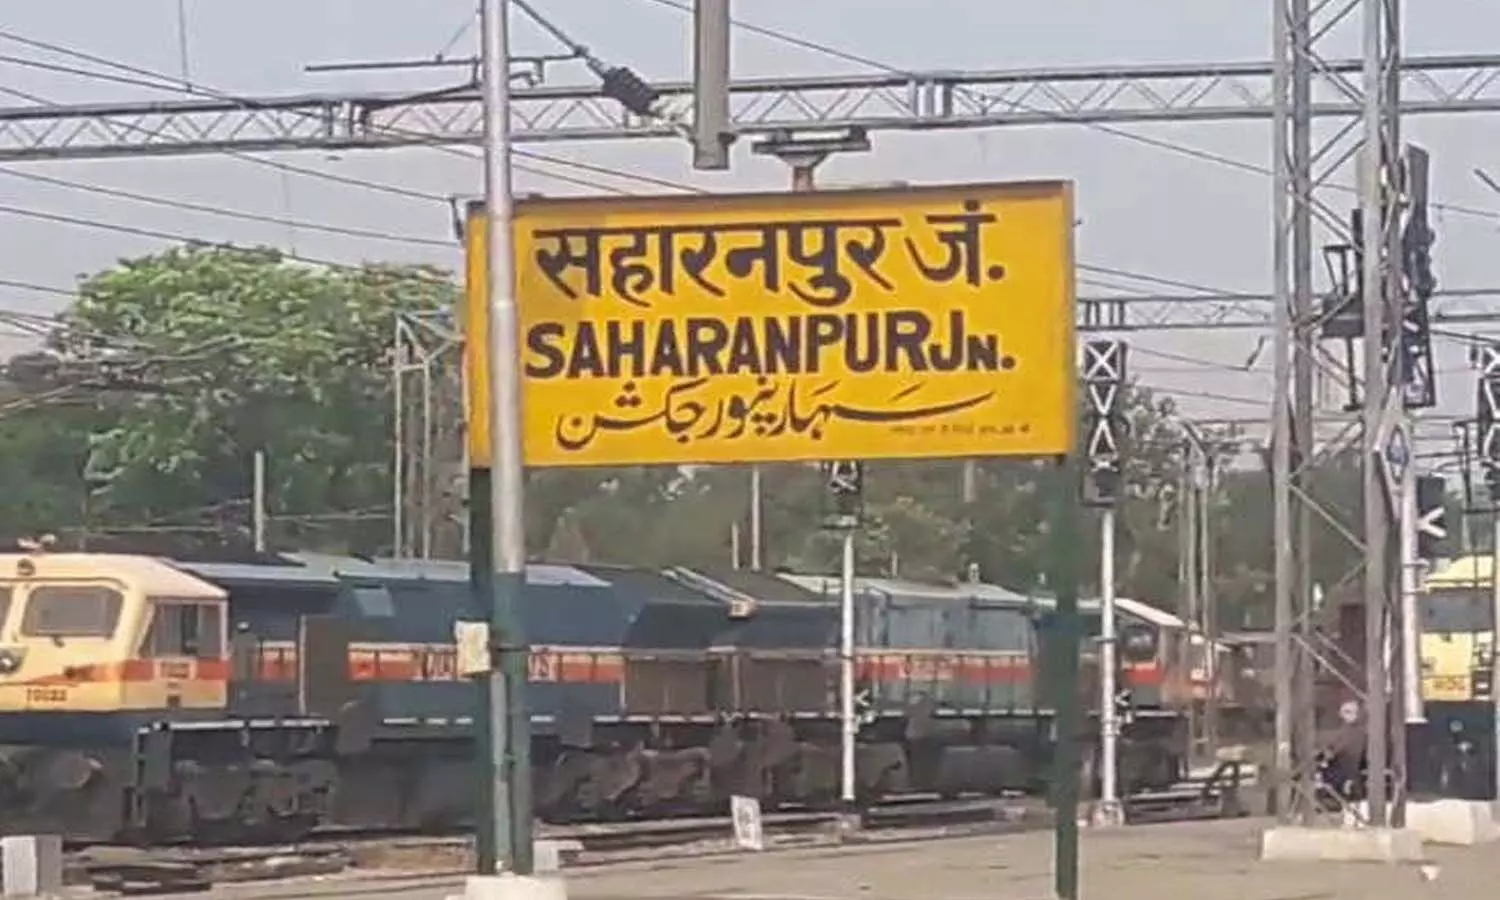 Threatened to blast Saharanpur railway station, police alert